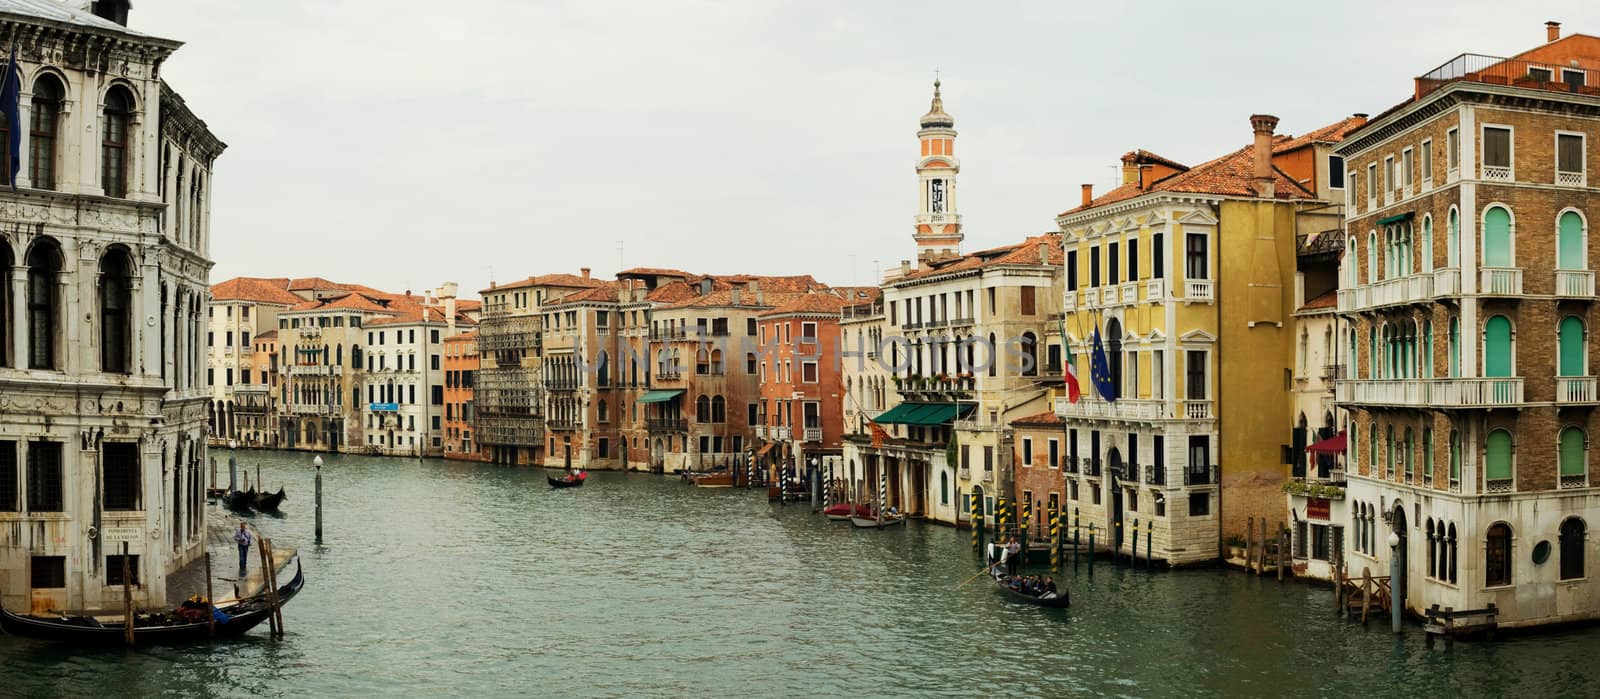 Canal in Venice by velkol